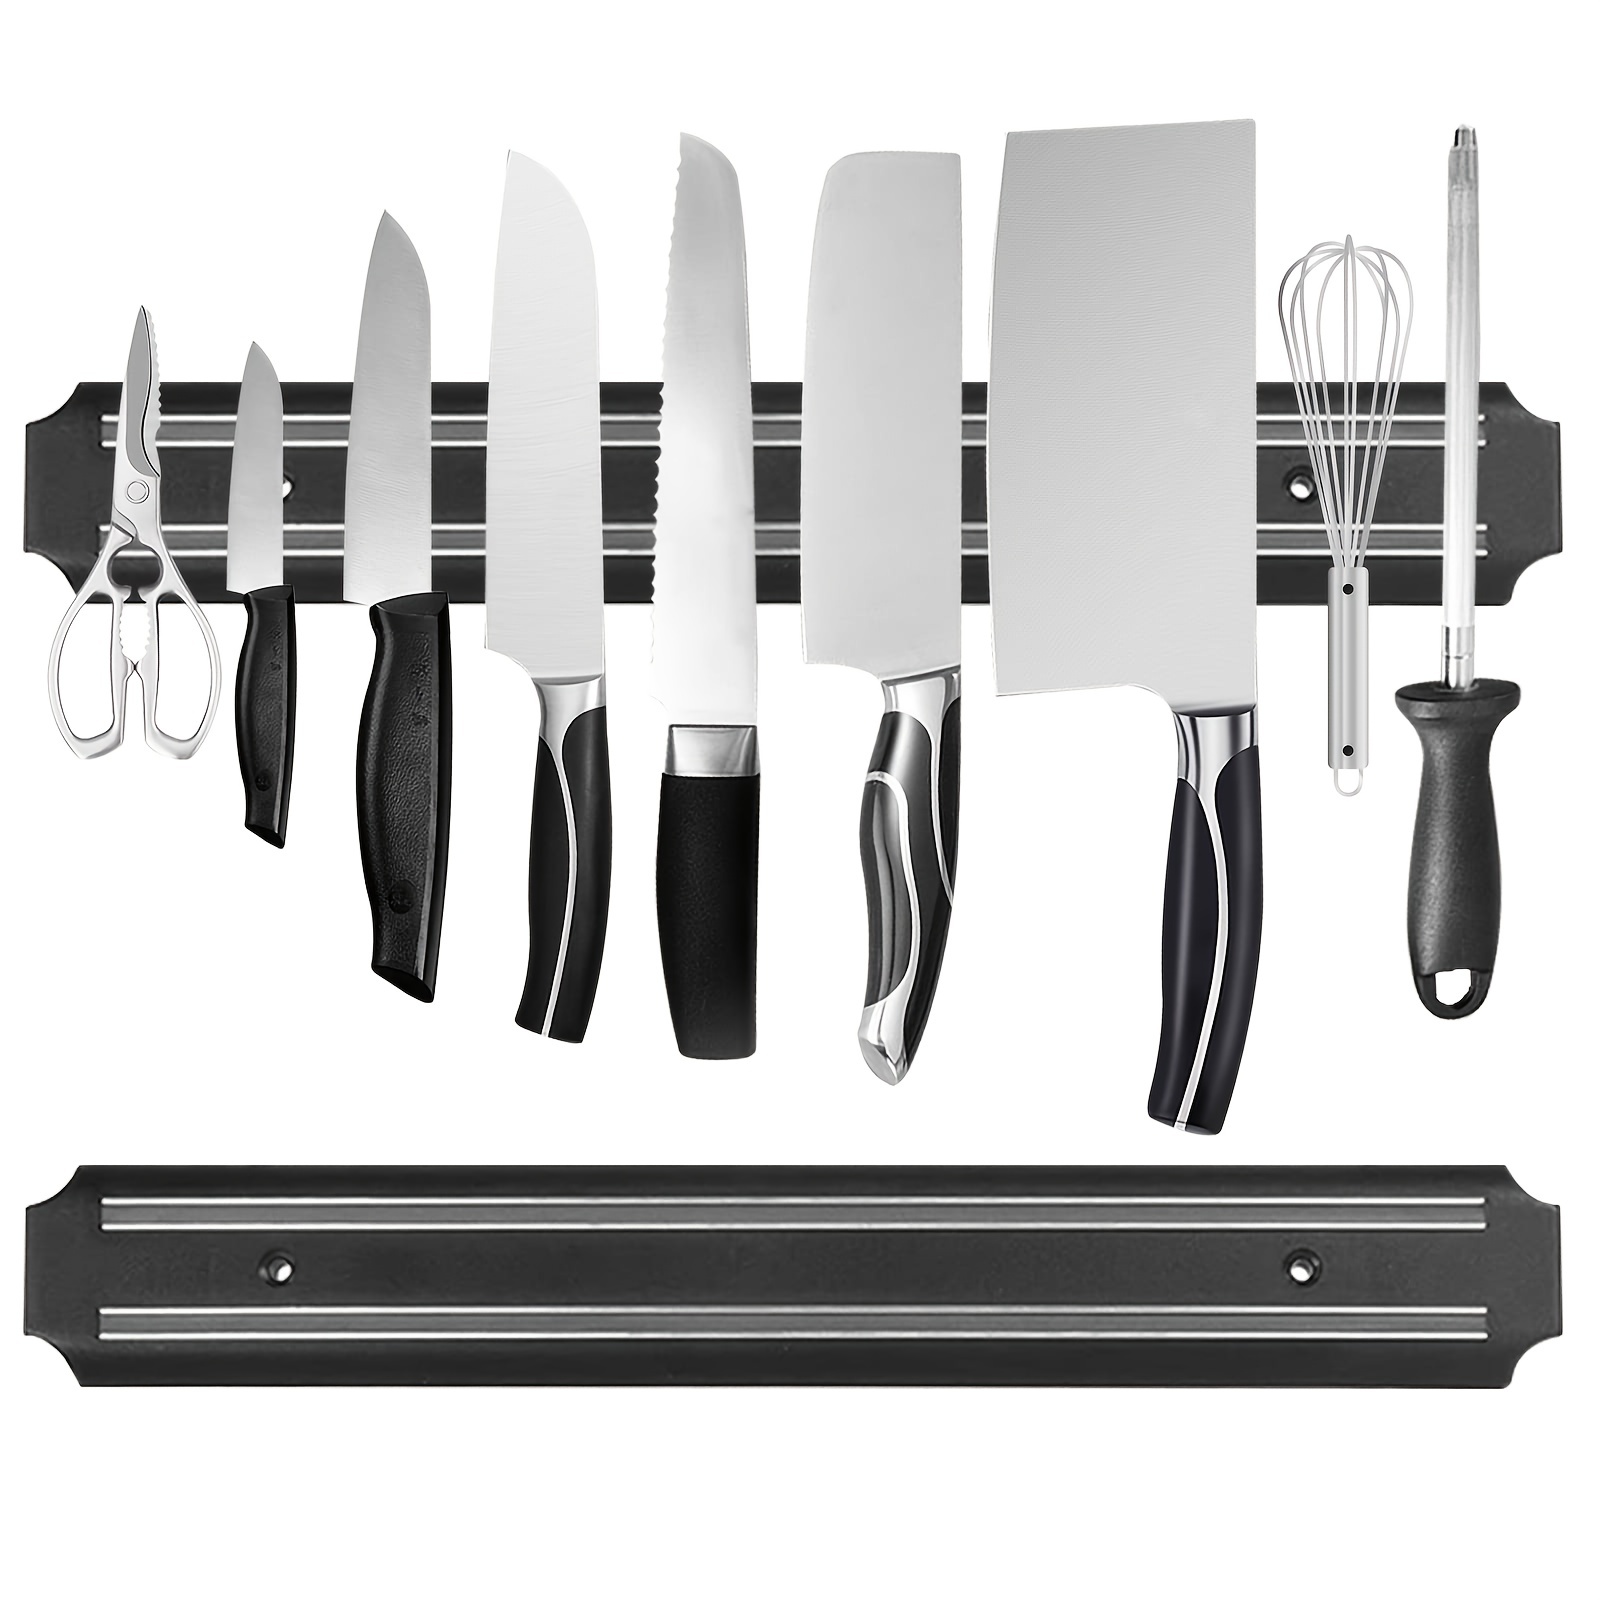  MG Custom Goods Soporte magnético para cuchillos, barra de  cuchillos de acero inoxidable con uso multiusos como estante para cuchillos,  barra de utensilios de cocina, tira de cuchillos fácil de instalar